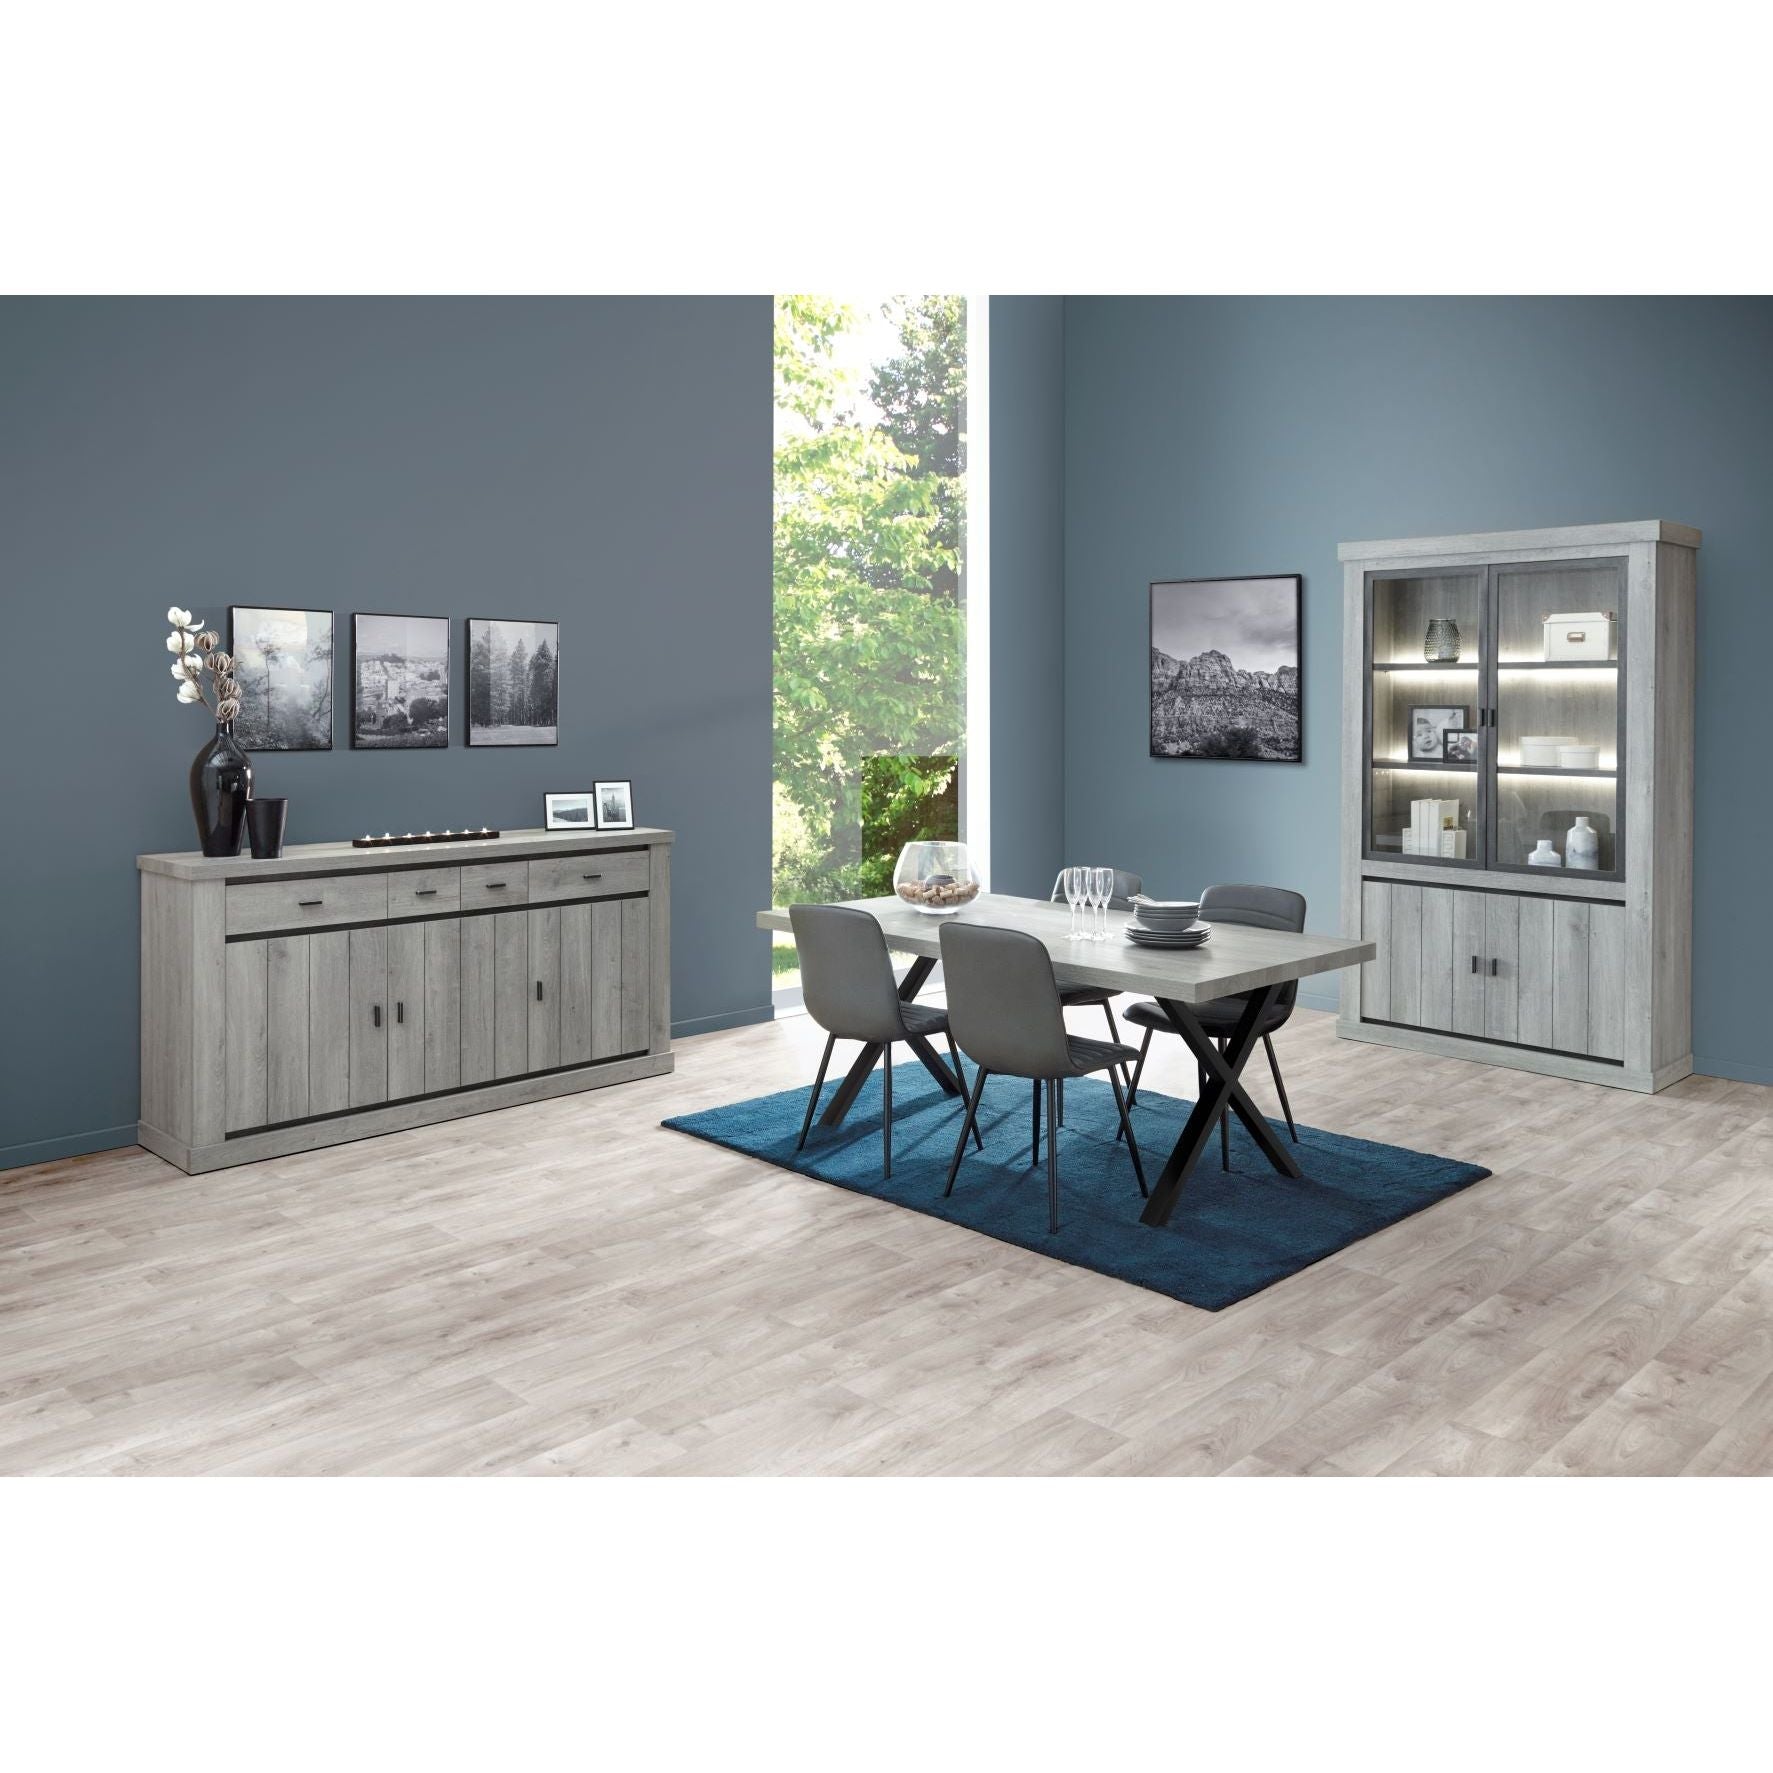 Dresser | Furniture series Coupé | natural, gray, black | 248x